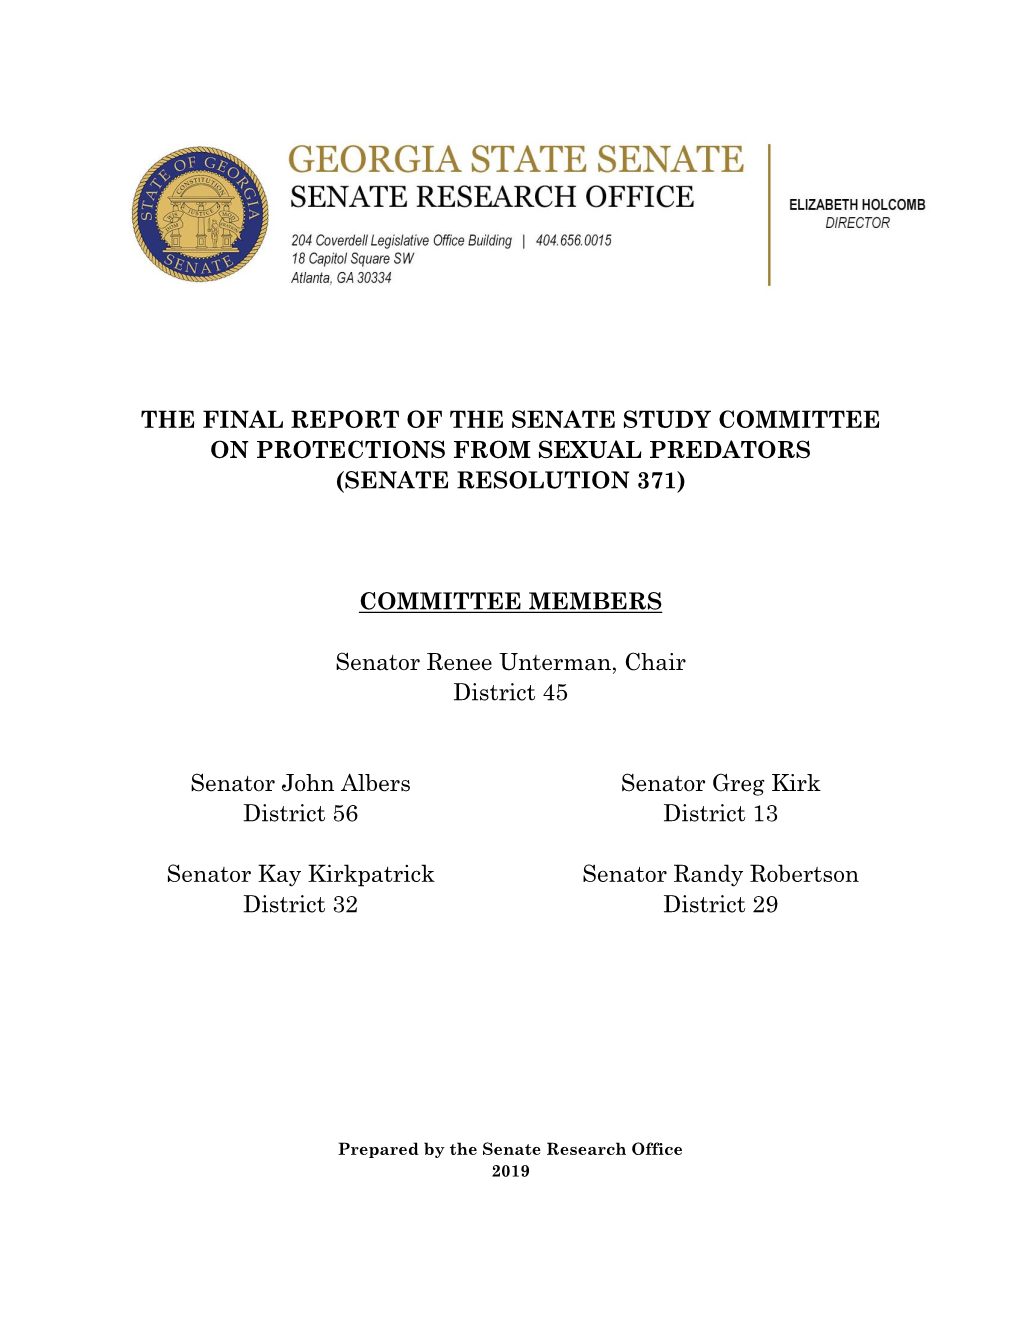 (Senate Resolution 371) Committee Members S